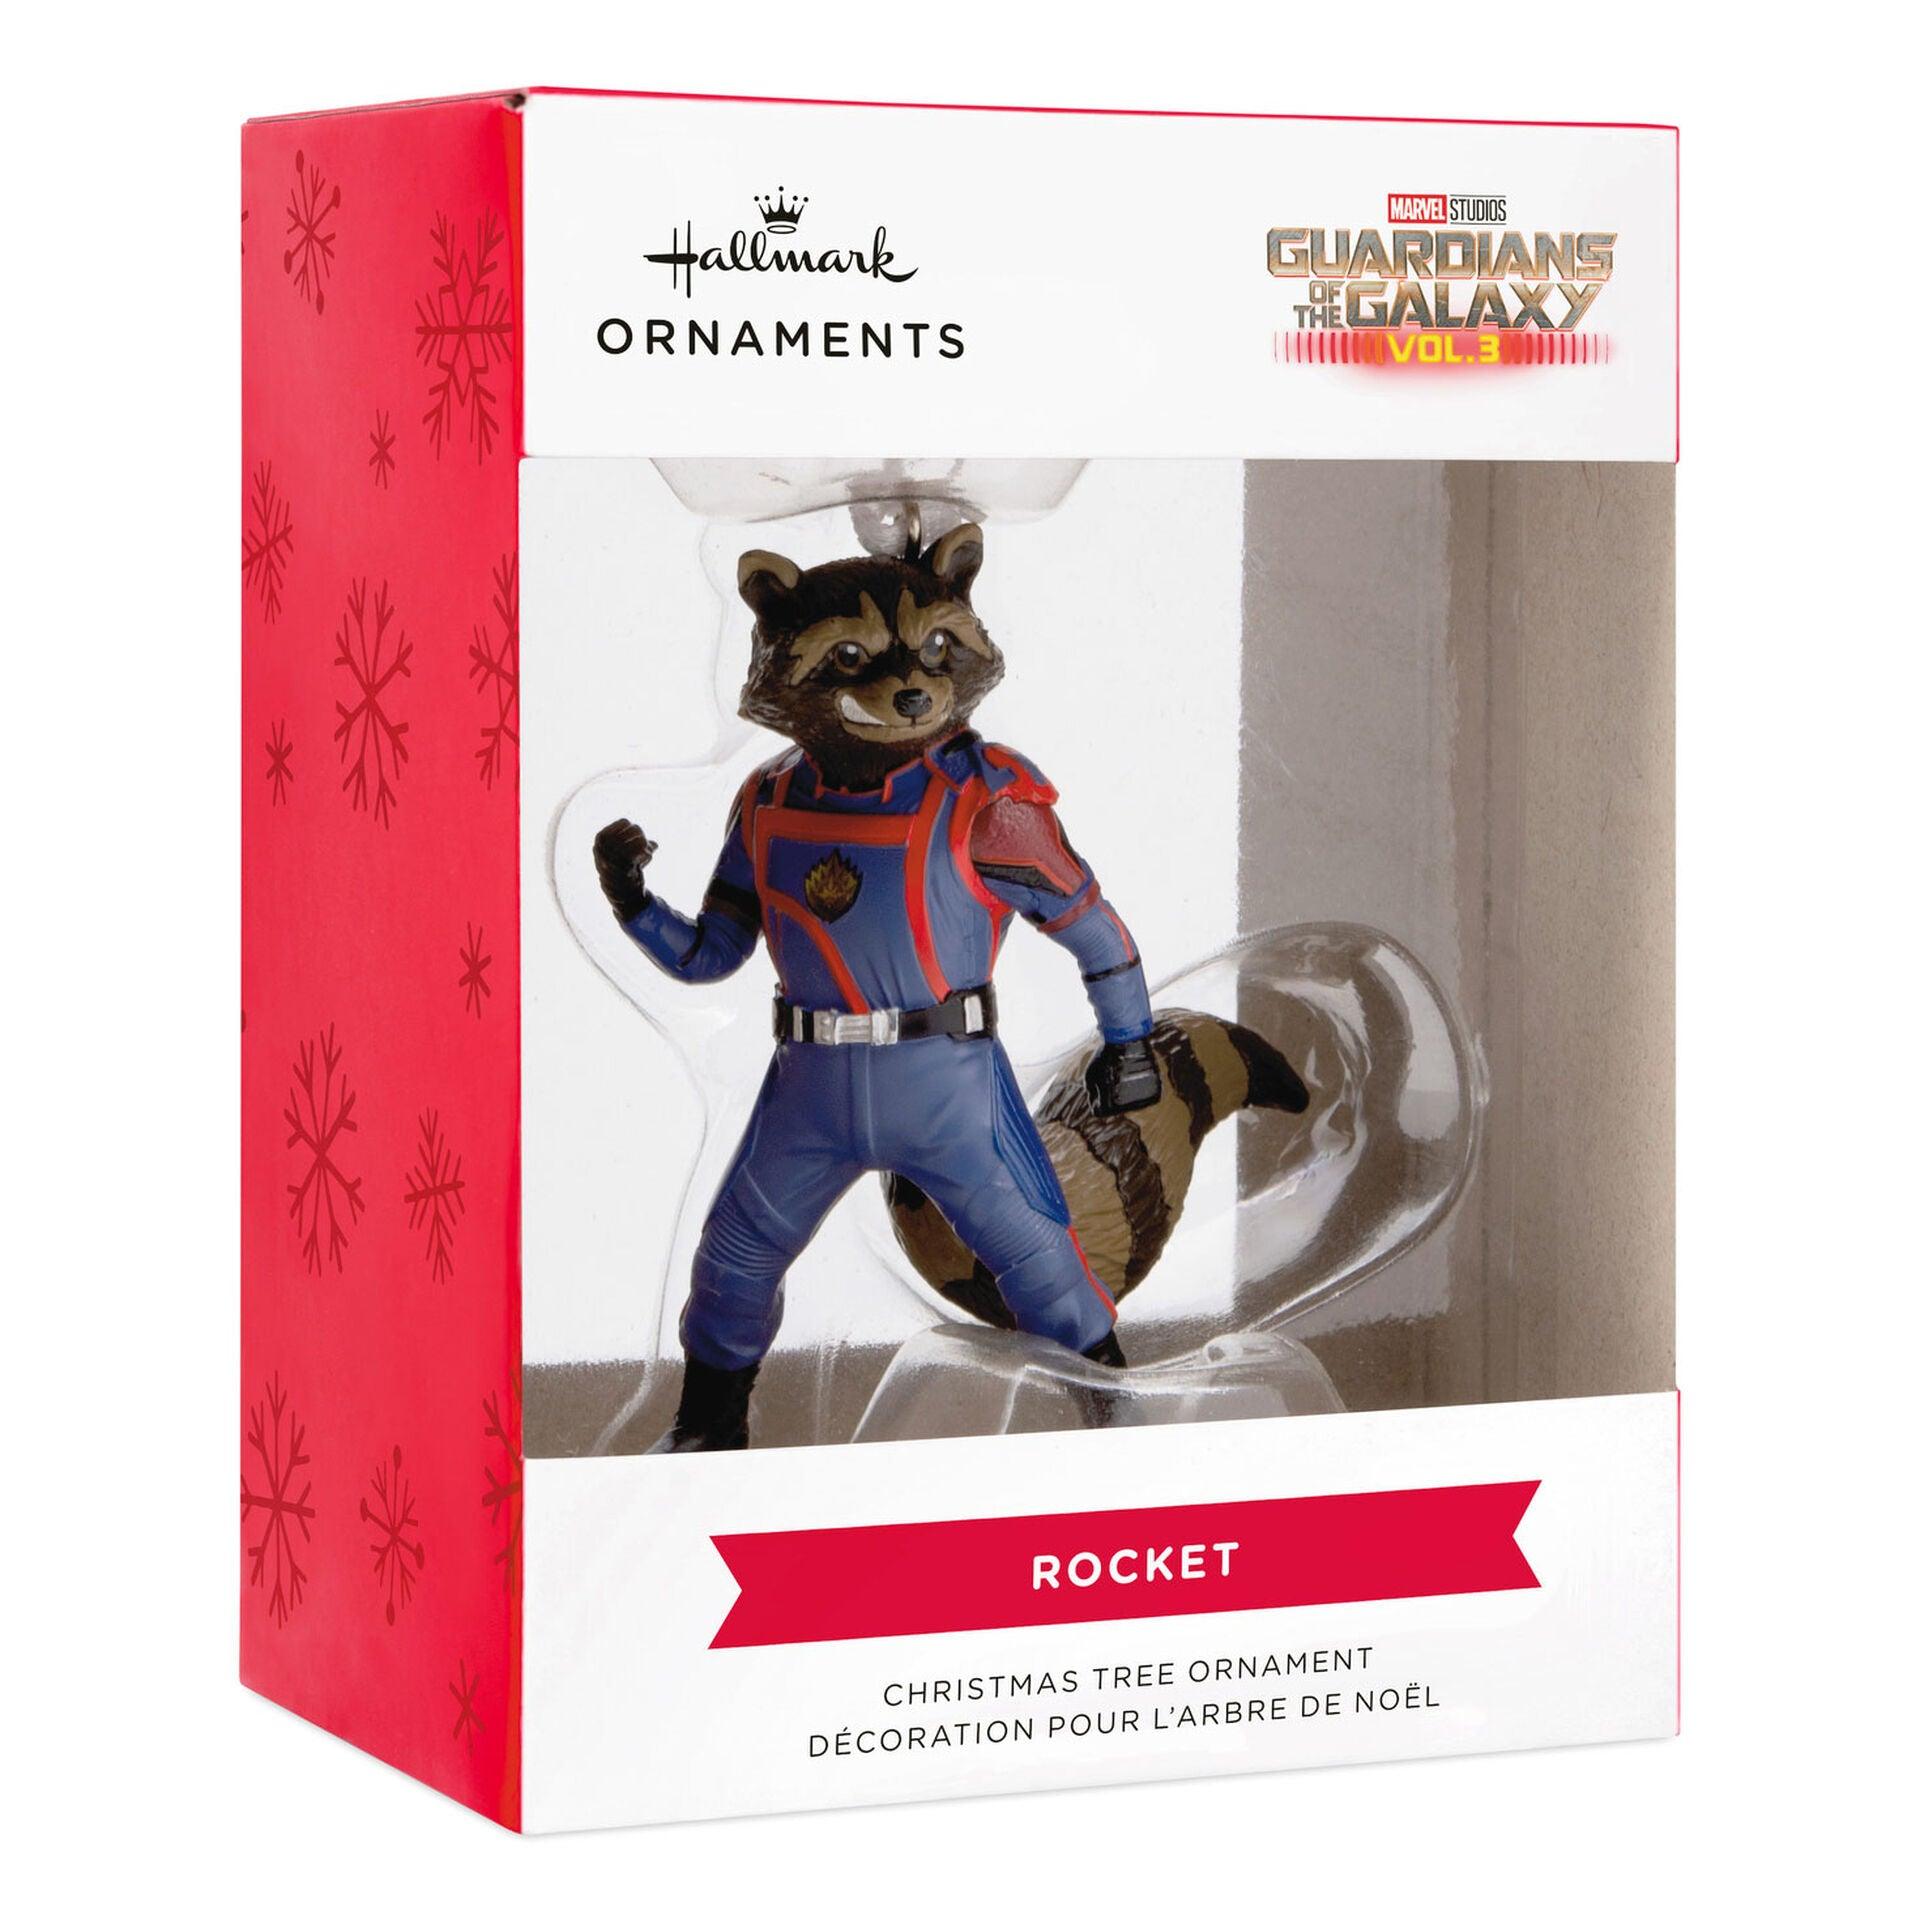 Marvel Studios Guardians of the Galaxy Vol. 3 Rocket Hallmark Ornament